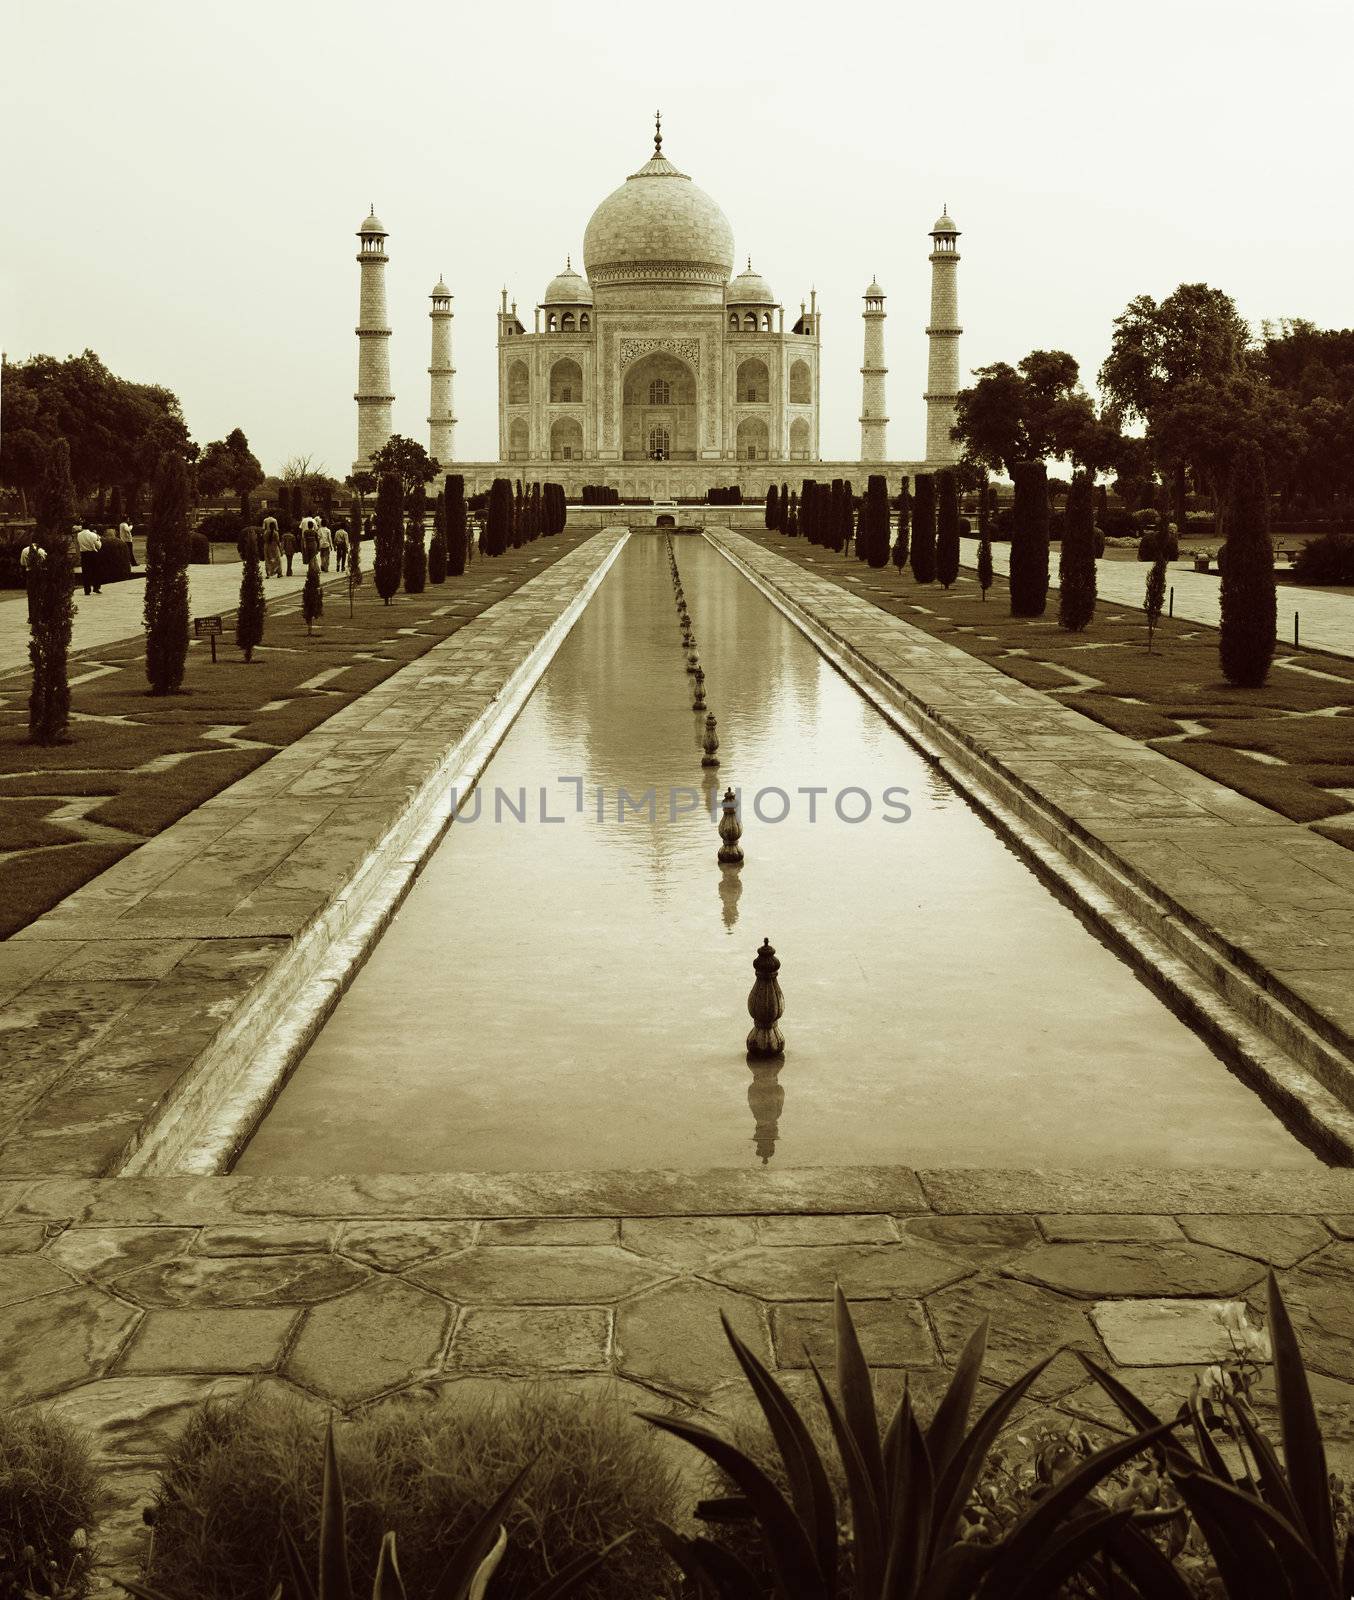 The Taj Mahal in Agra, India.
